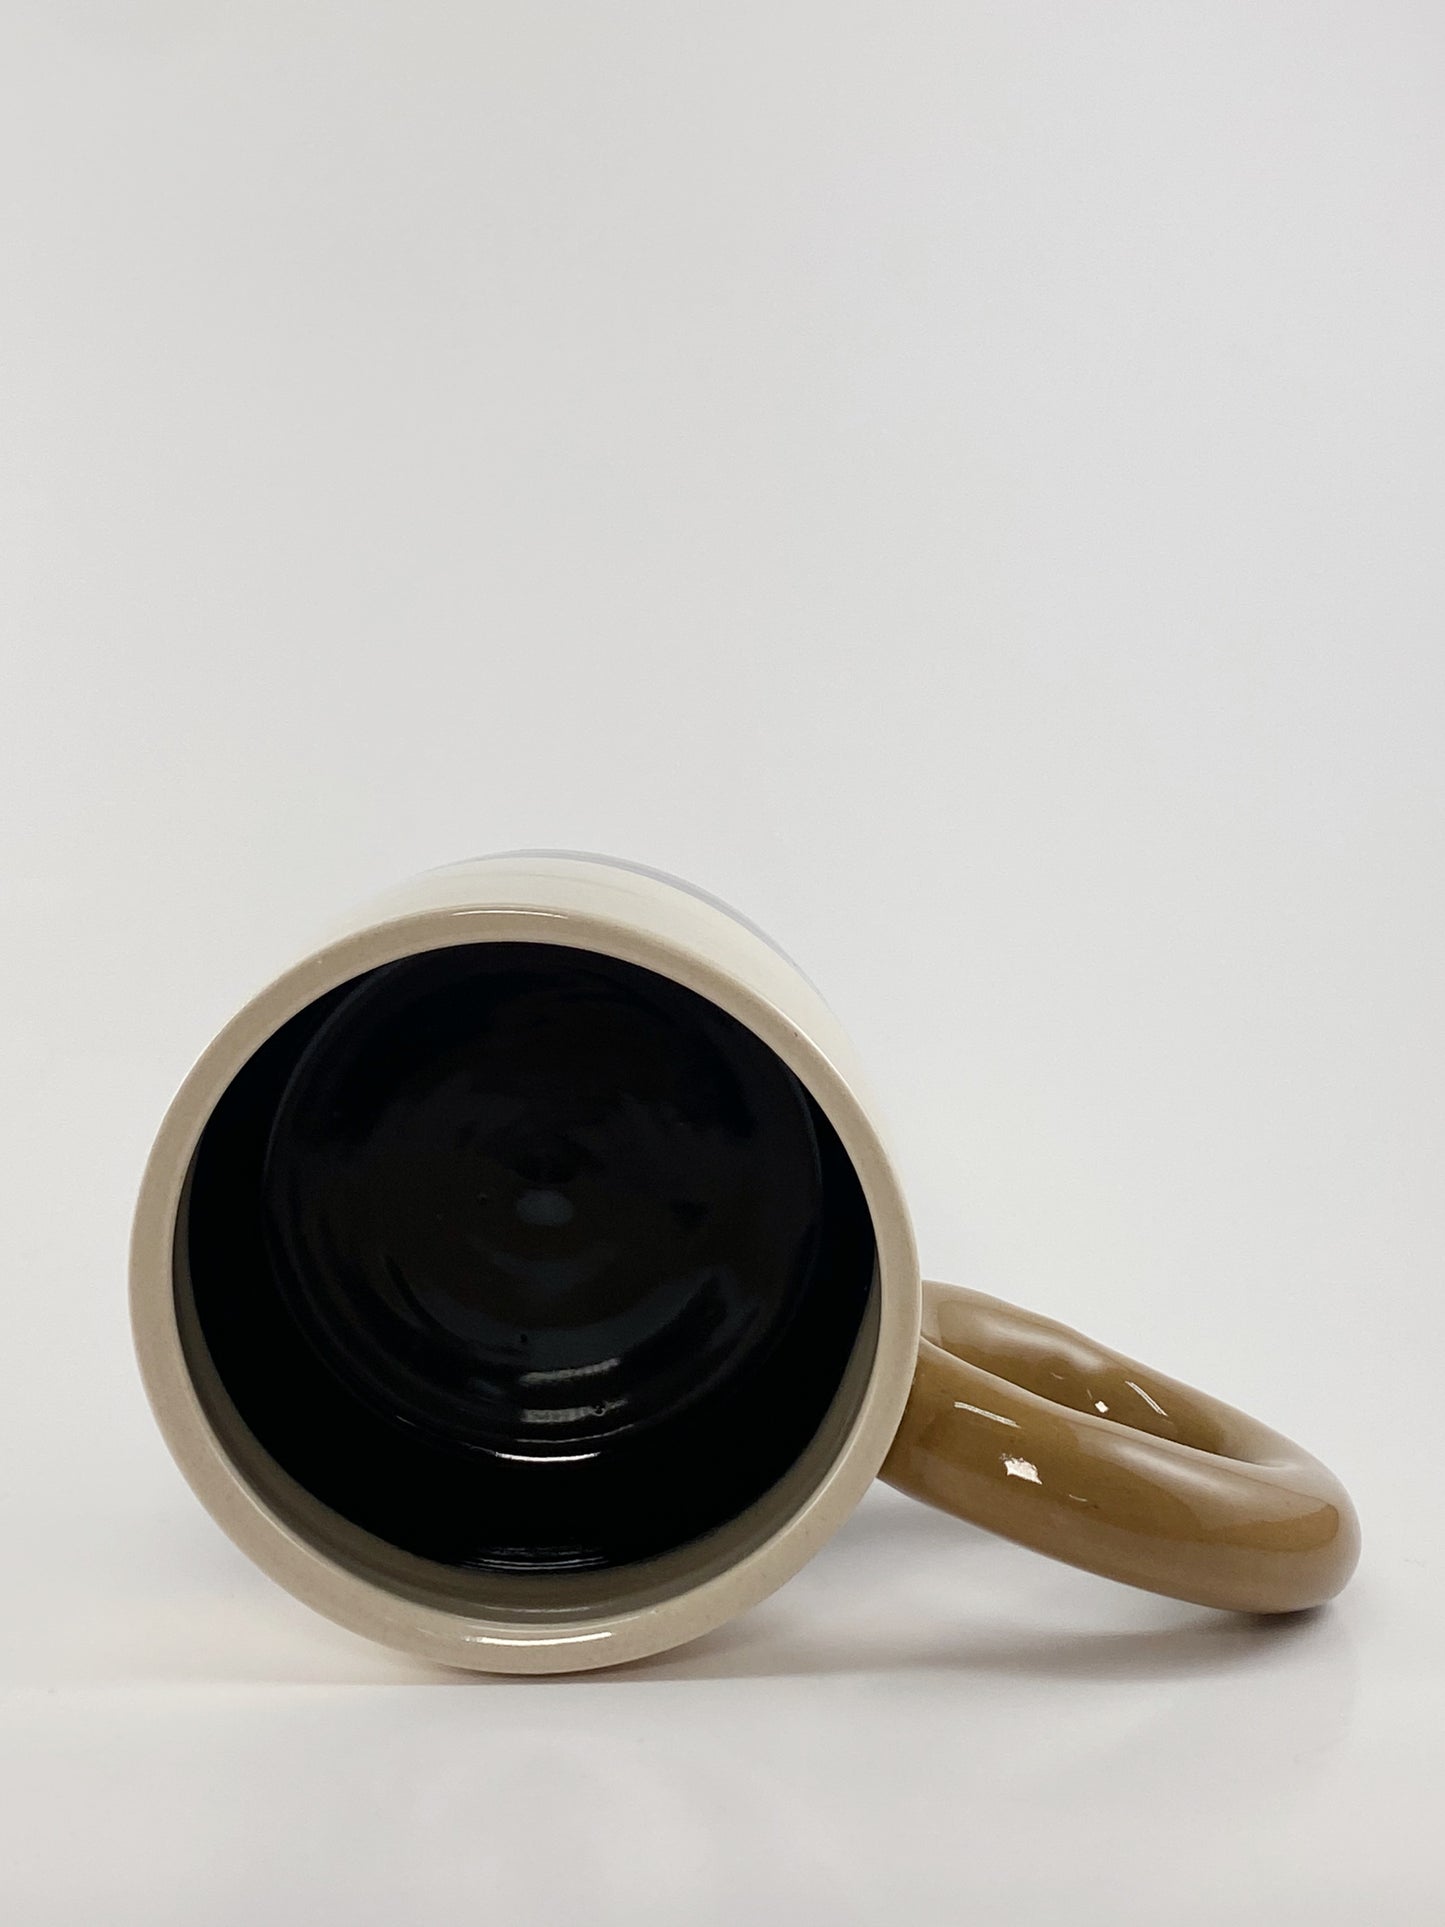 Tricolor Mug - Brown, White, Black